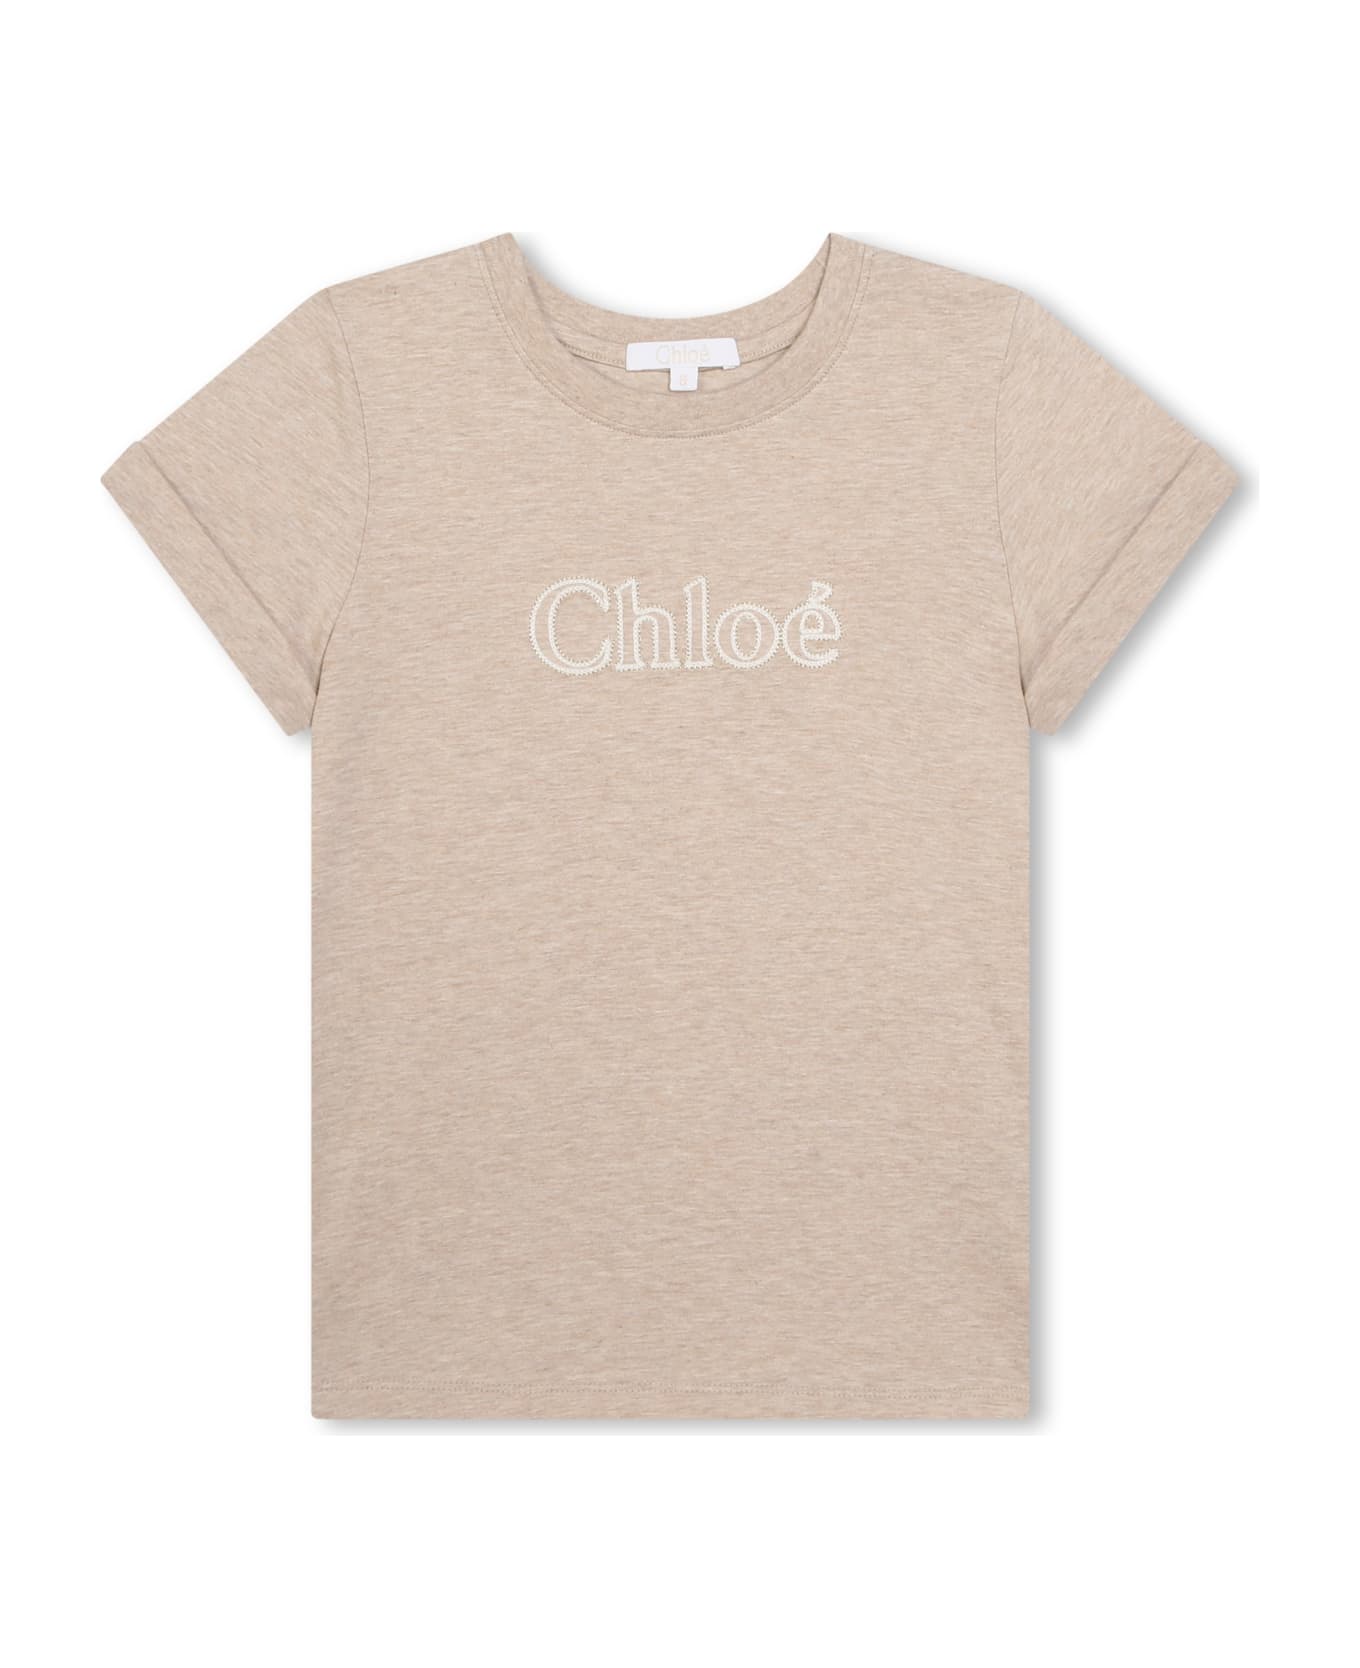 Chloé T-shirt With Print - Beige Antico